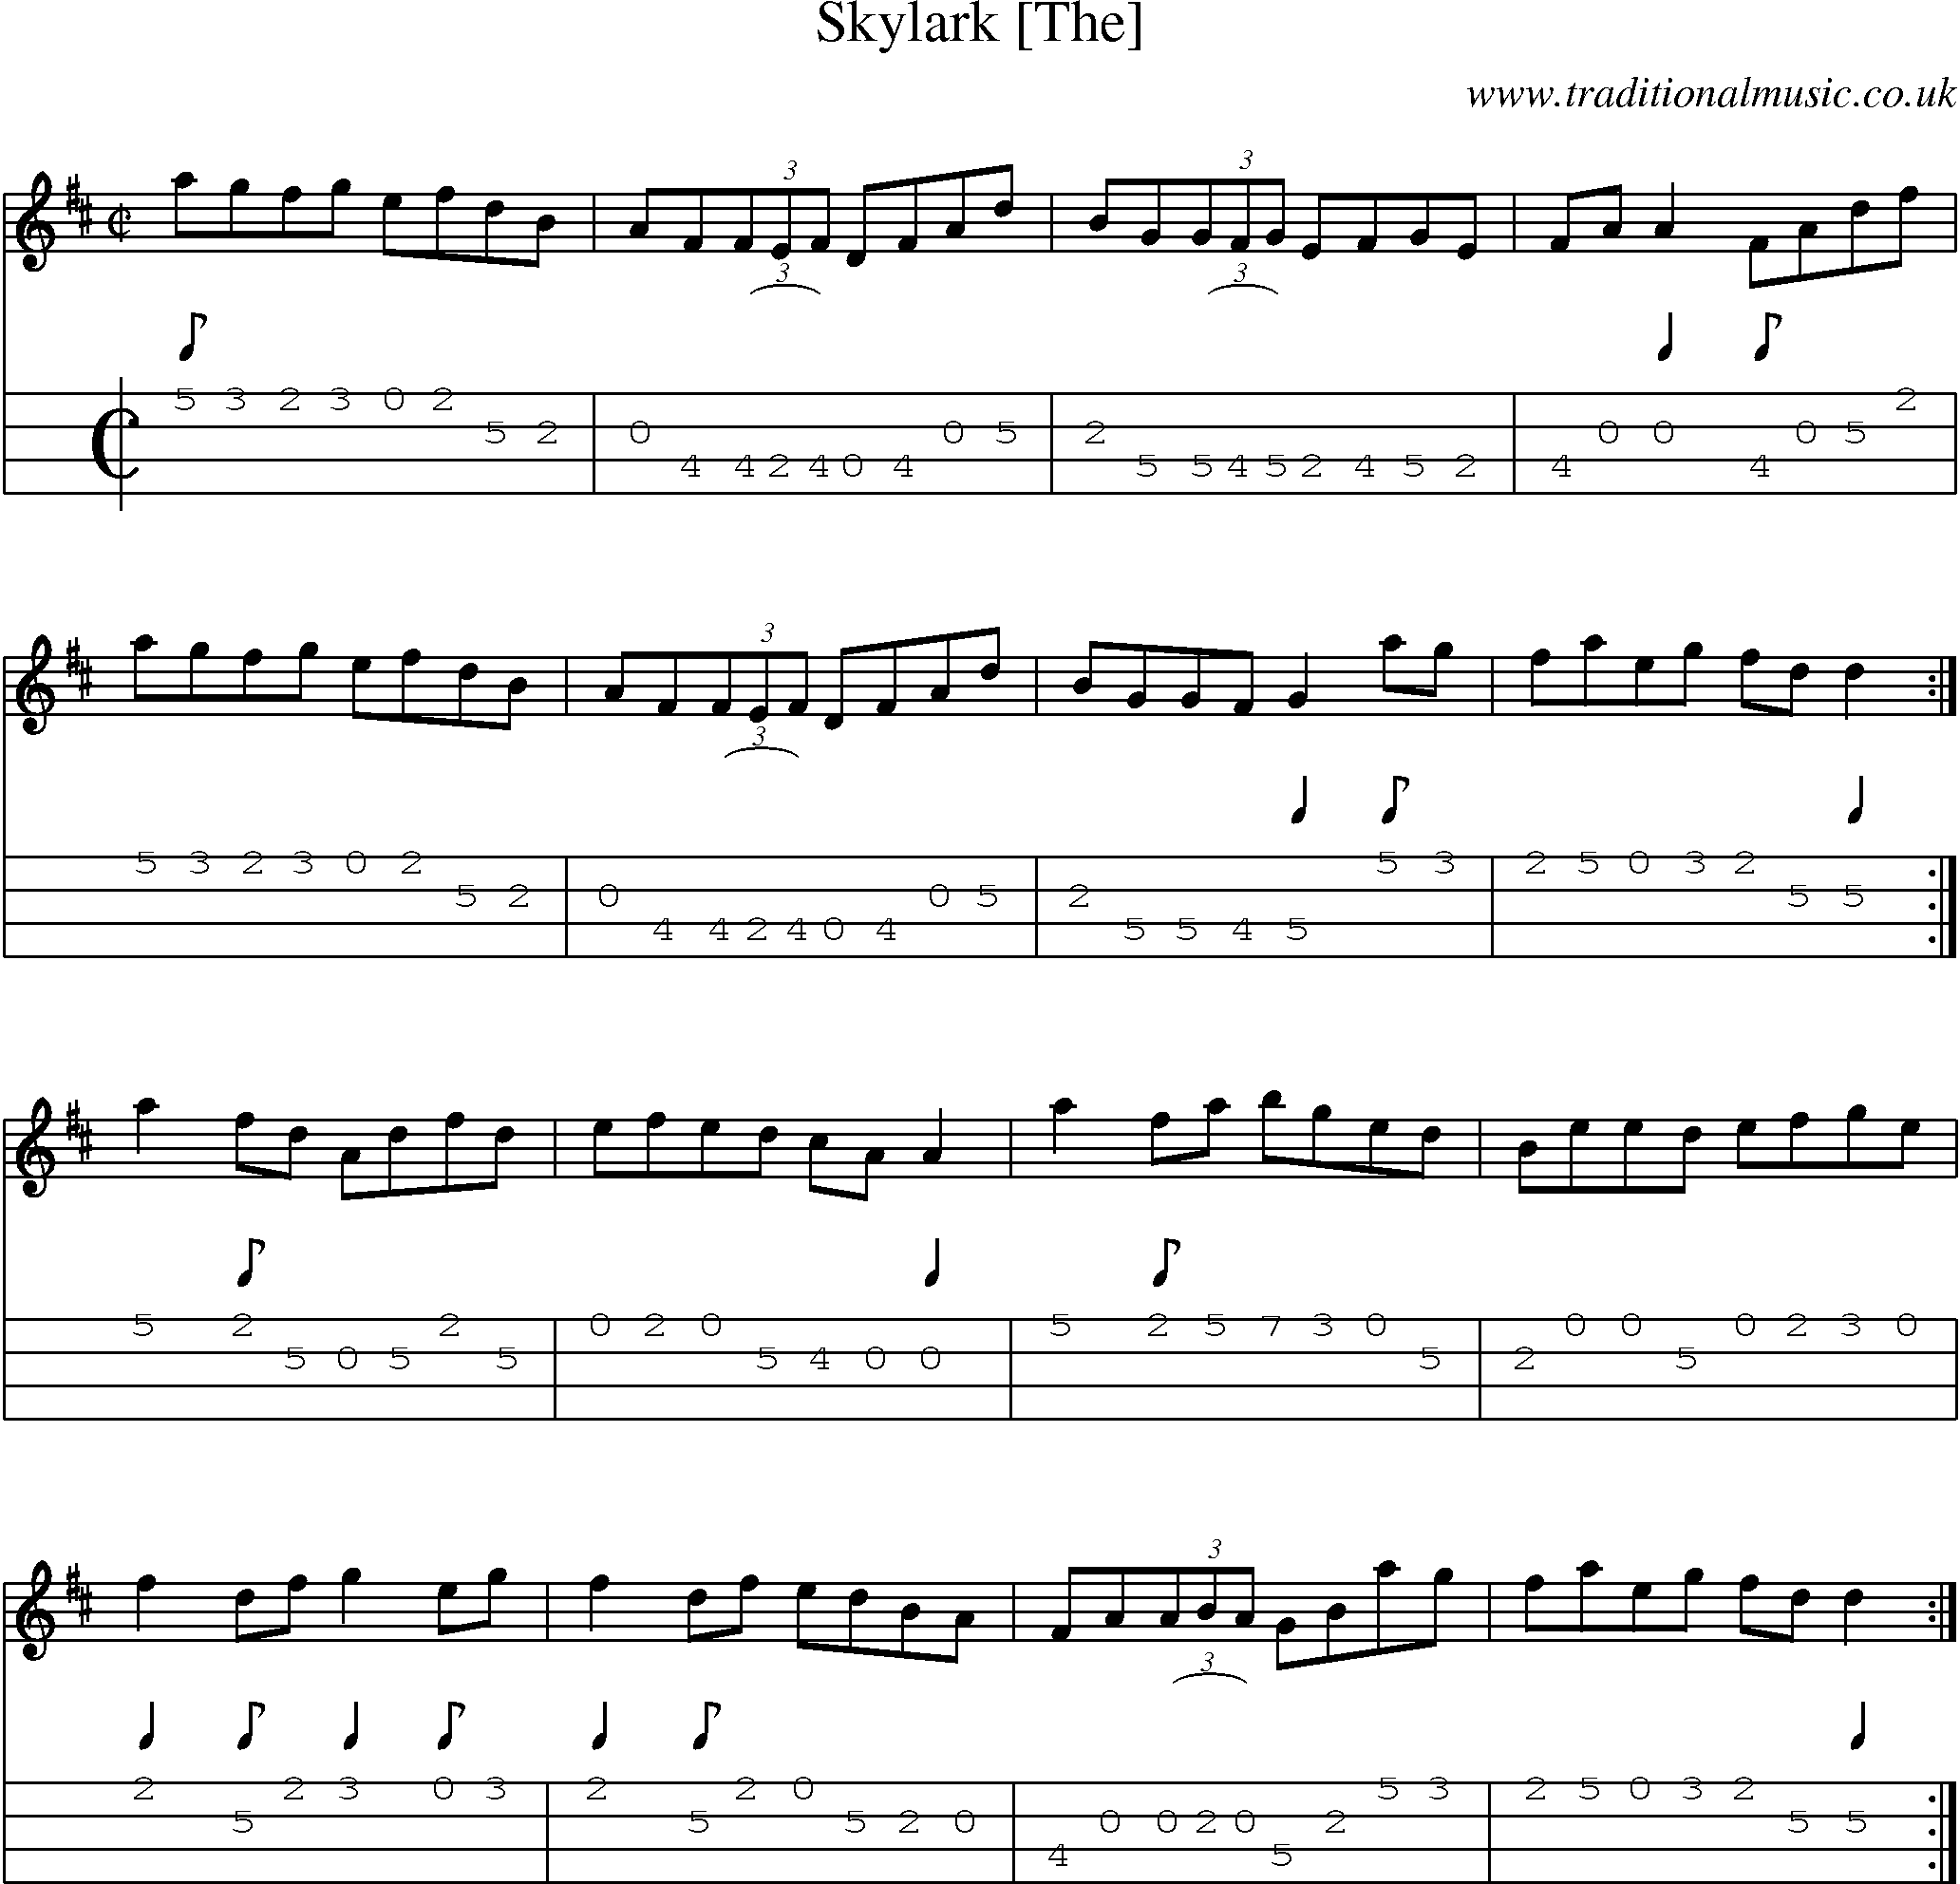 Music Score and Mandolin Tabs for Skylark [the]